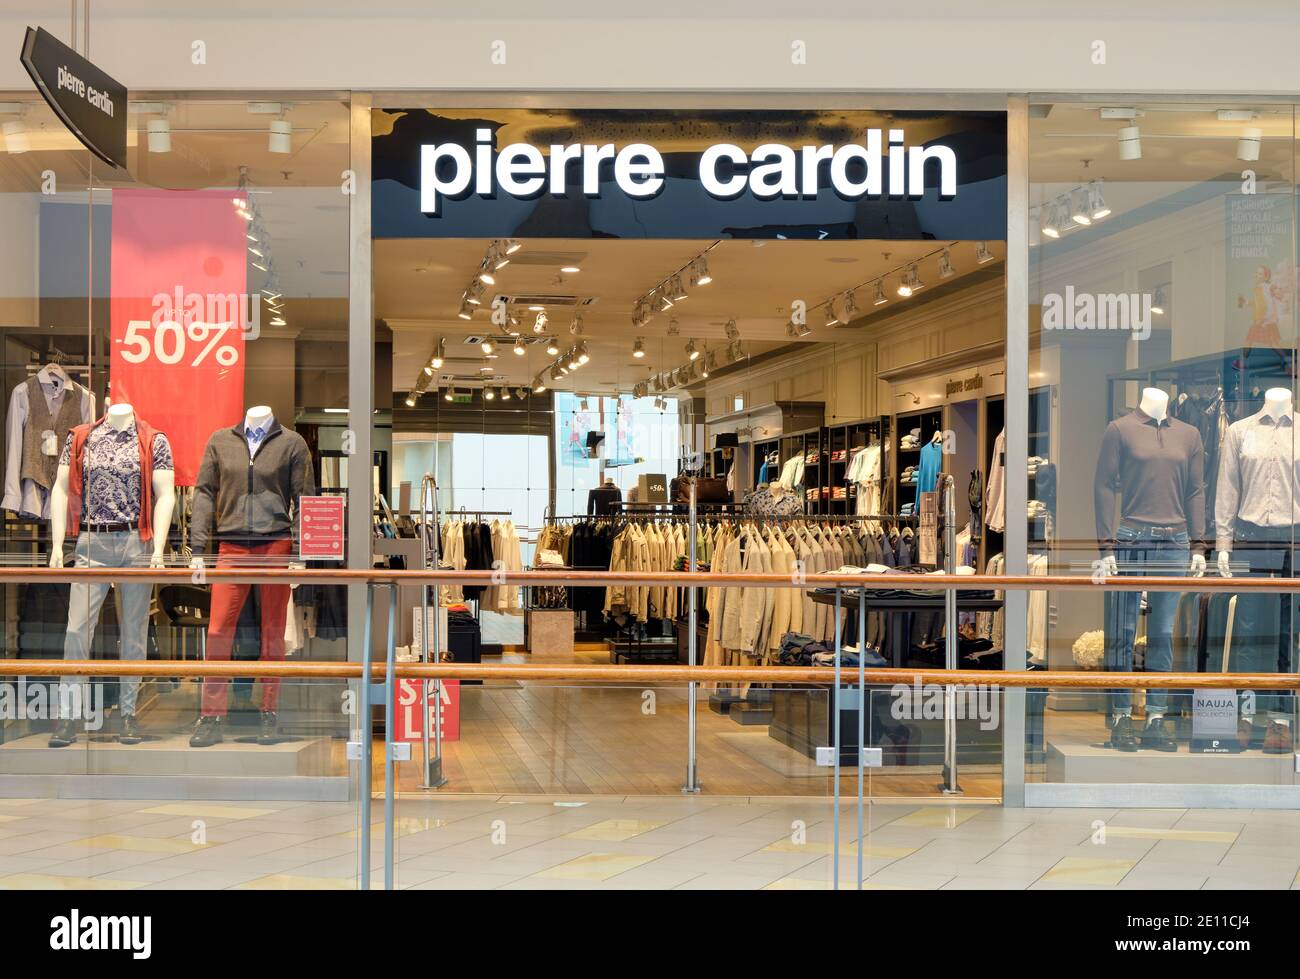 Pierre Cardin luxury fashion shop entrance with brand signage Stock Photo -  Alamy